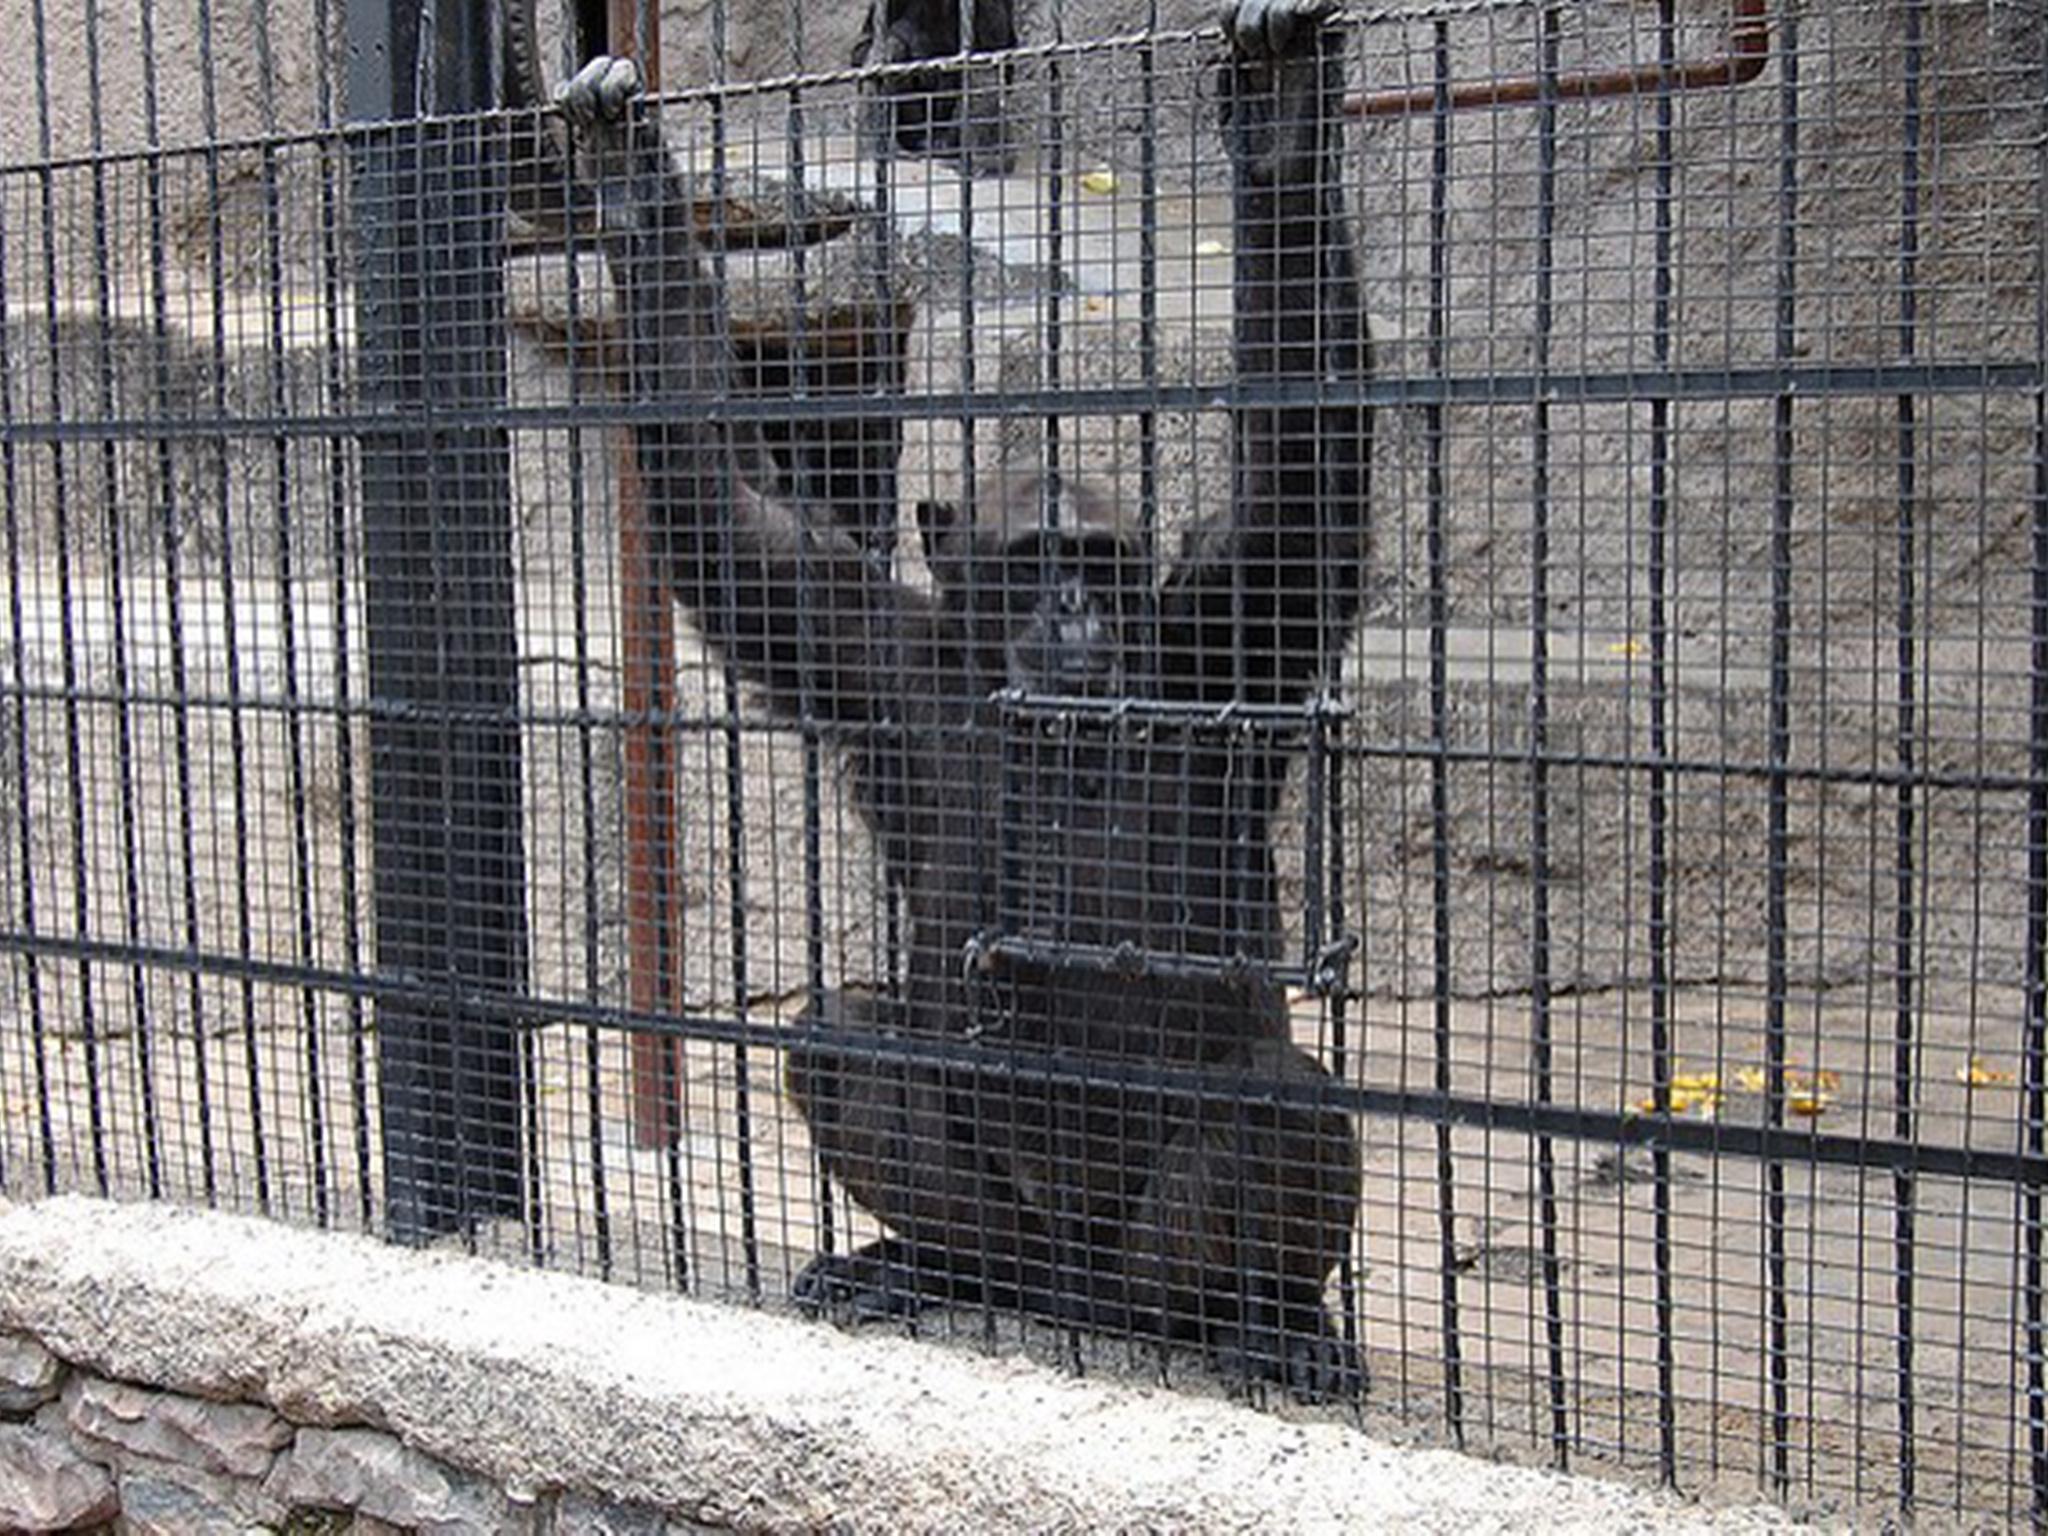 Cecilia the chimpanzee will be transferred to the Great Ape Project's sanctuary in Brazil